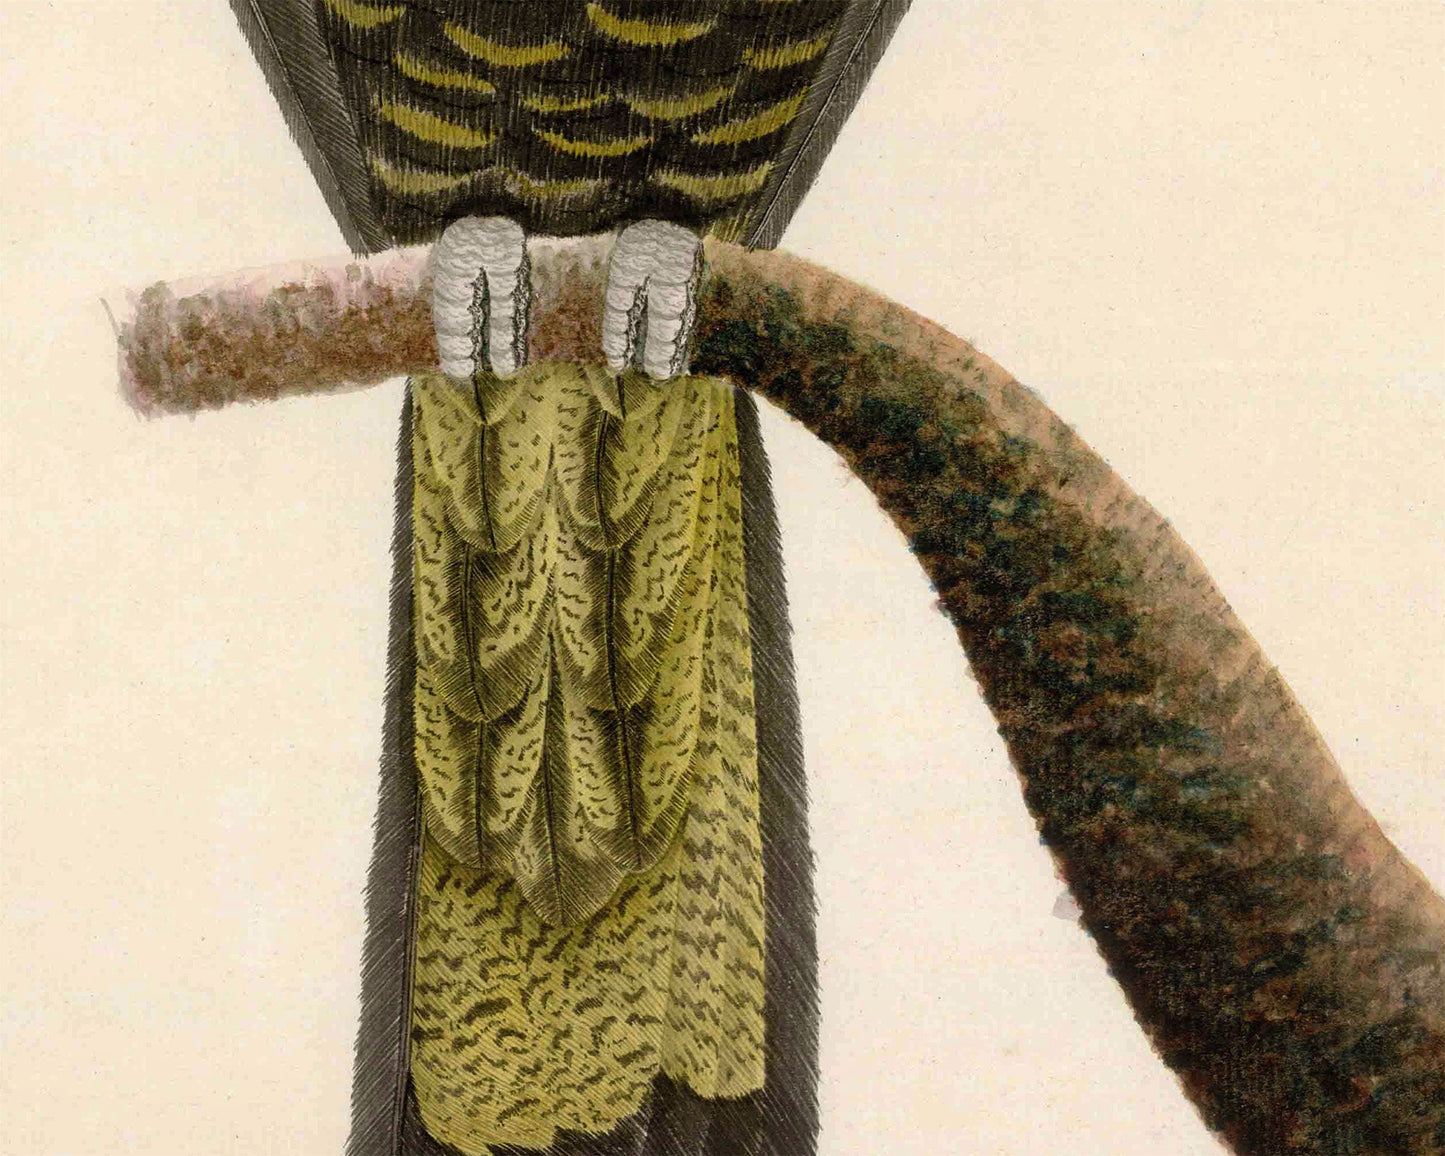 Ancient cockatoo art | 18th century bird illustration | Natural history print | Animal wall decor | Modern vintage décor | Eco-friendly gift